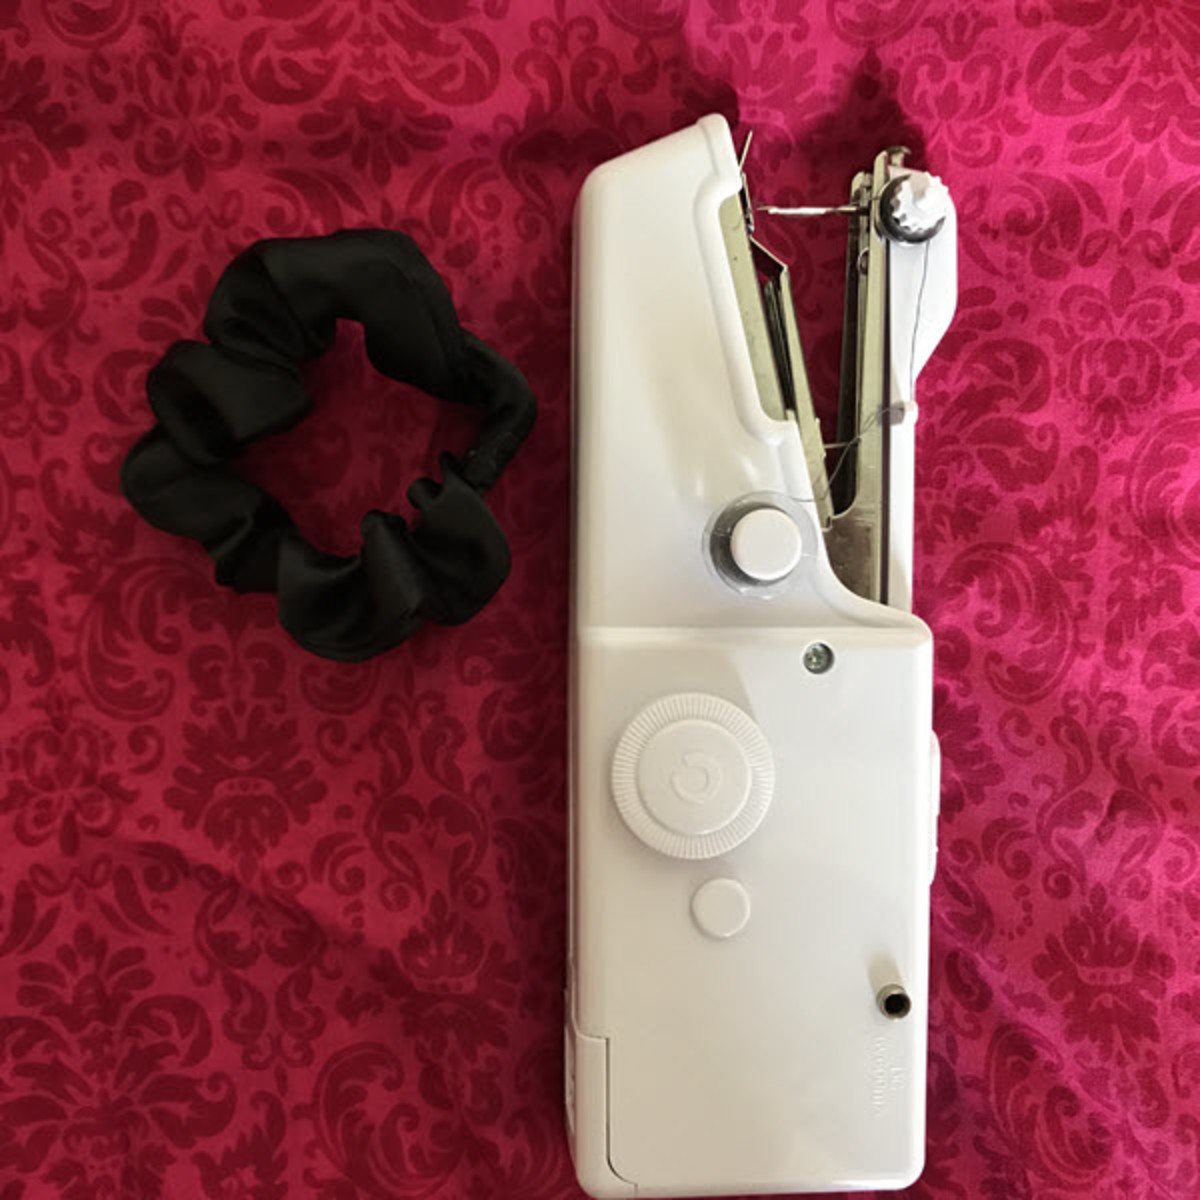 A silk scrunchie made using the Camtoa portable handheld sewing machine